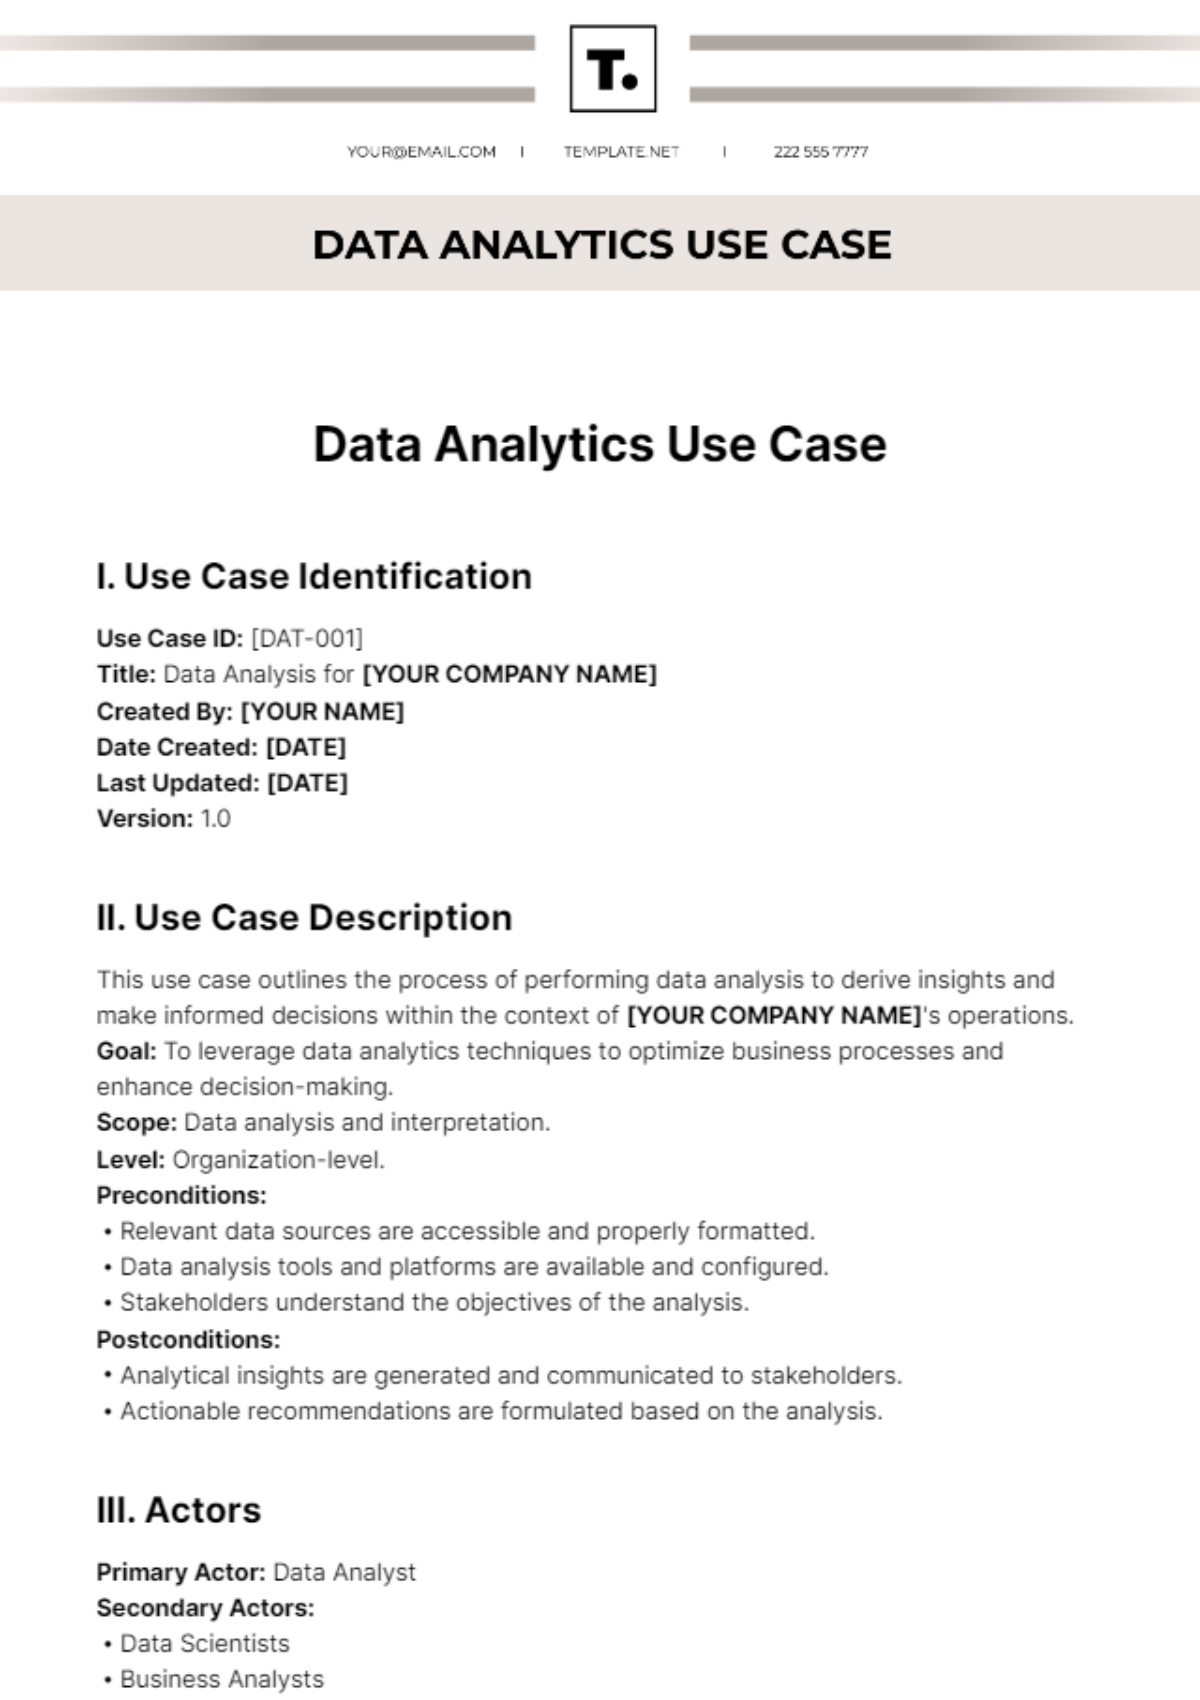 Free Data Analytics Use Case Template